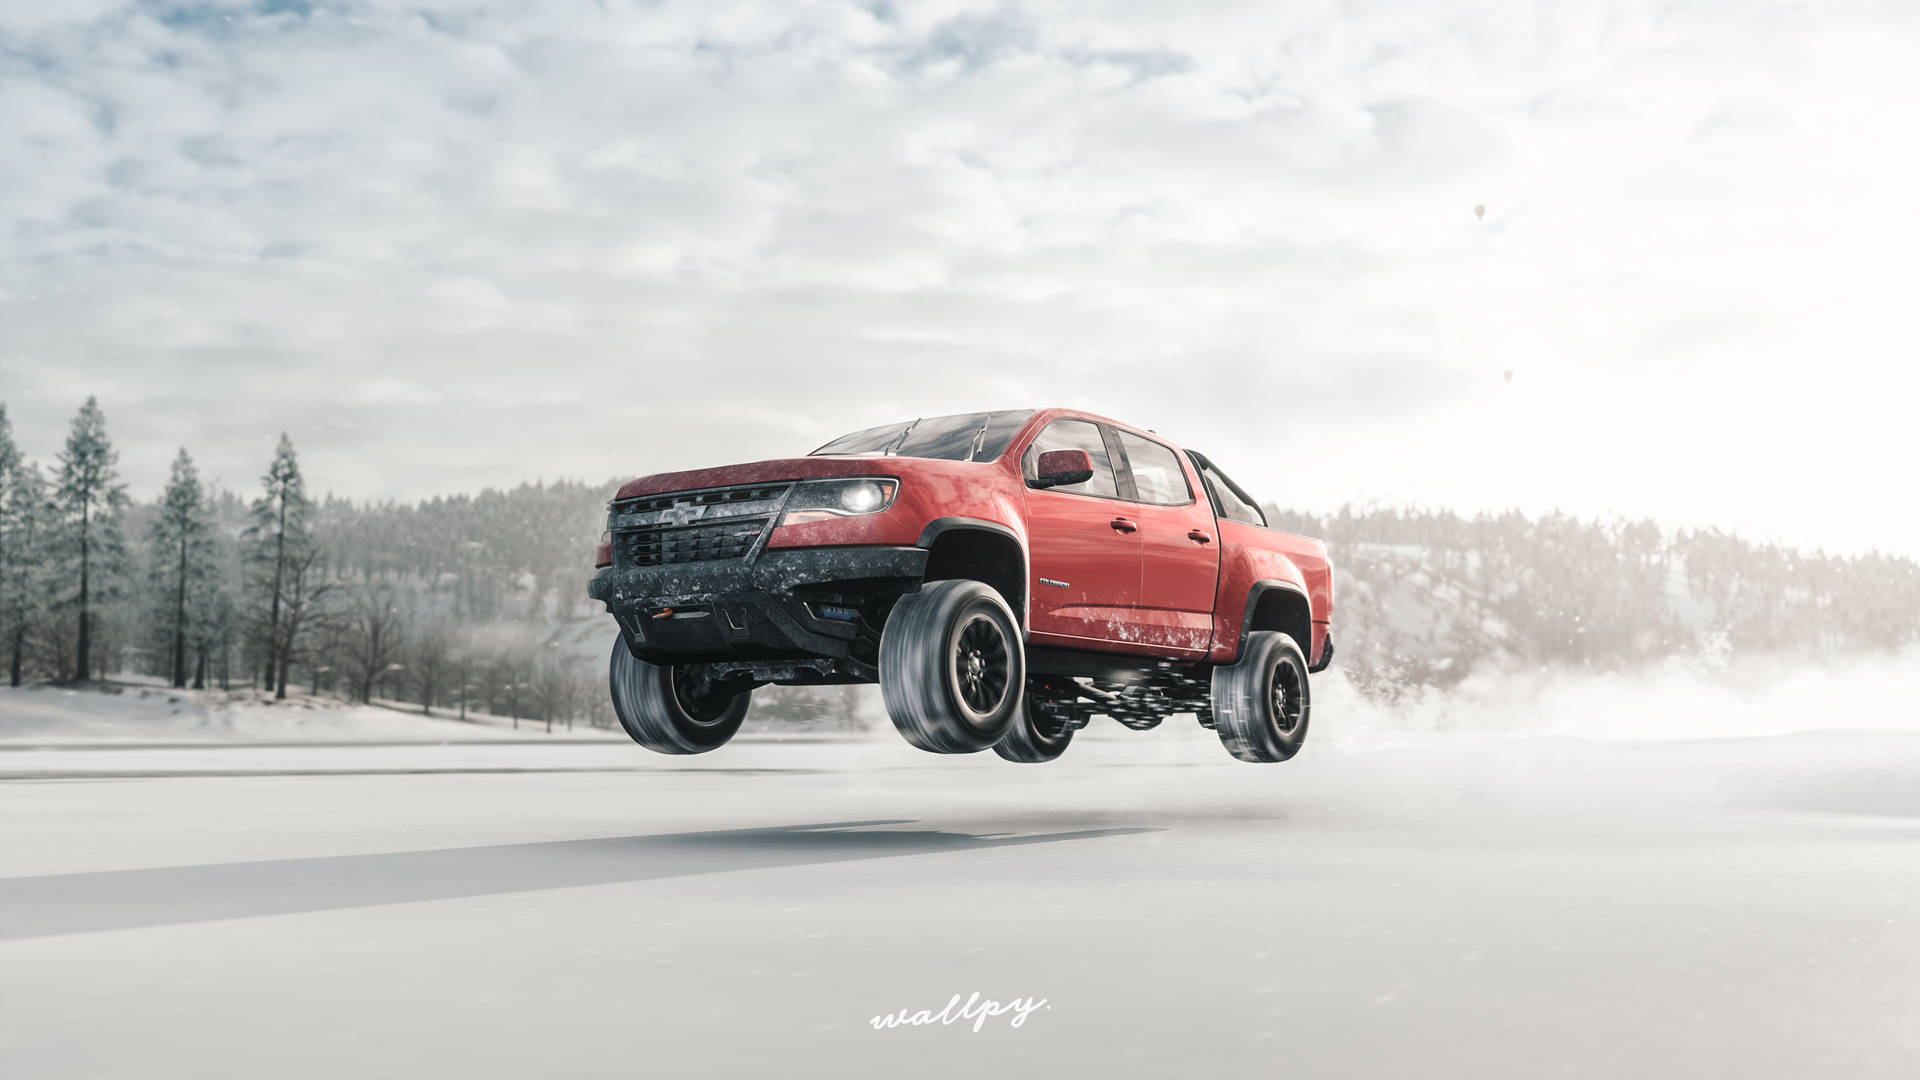 Camion Forza Horizon 4 4k Che Salta Sulla Neve Sfondo